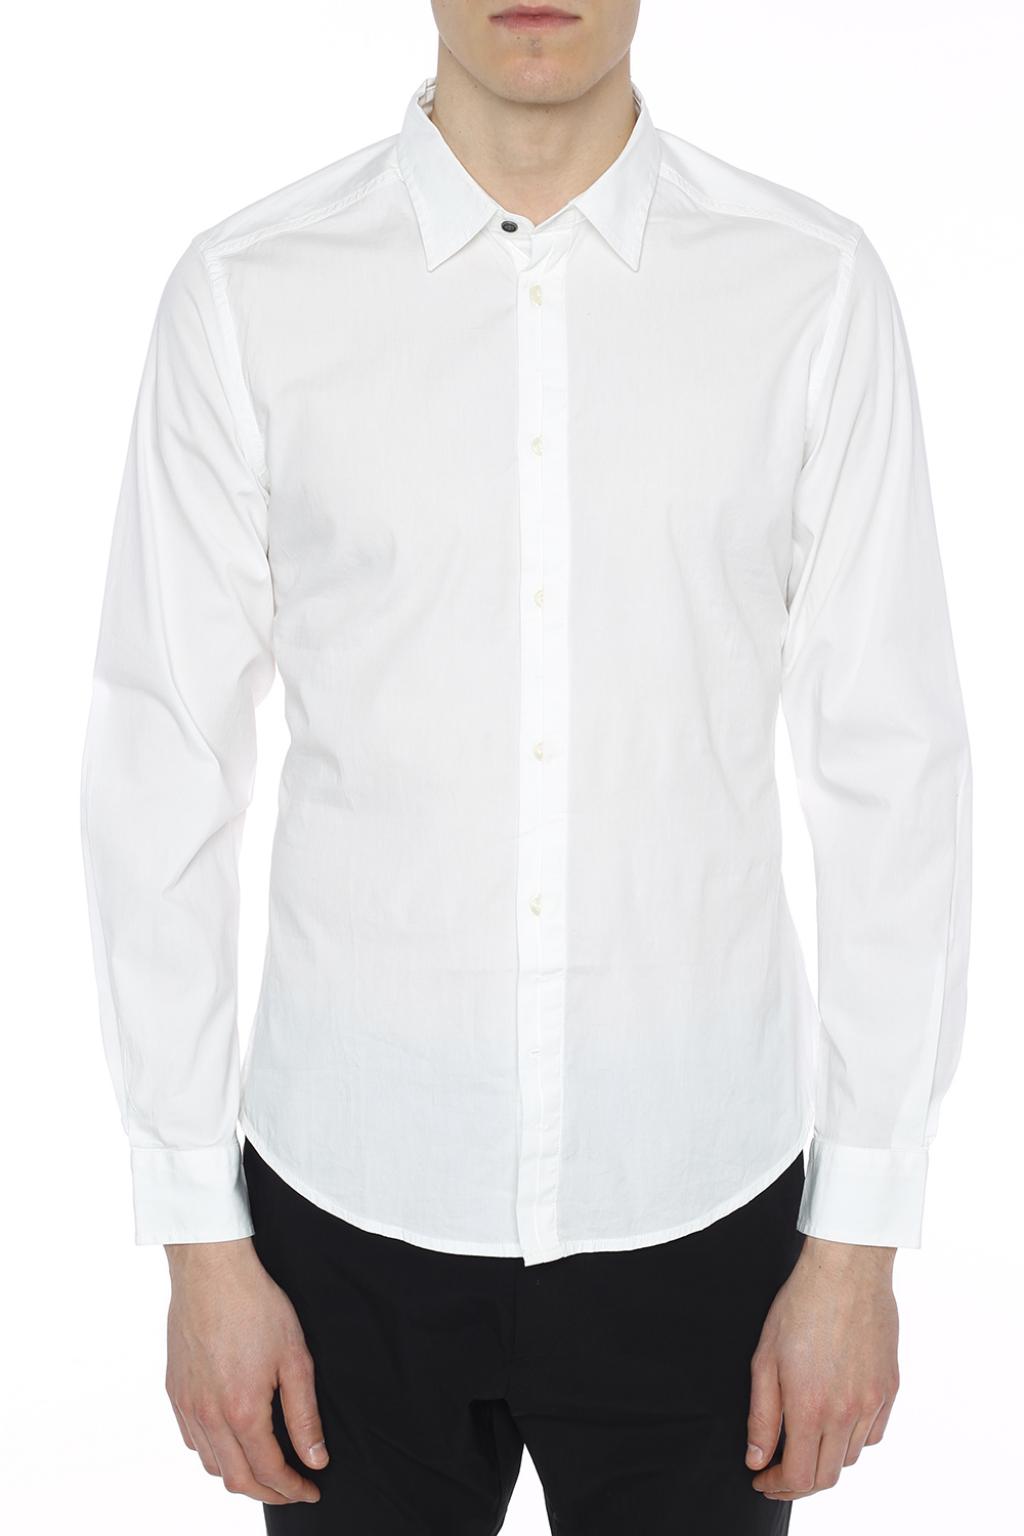 Diesel White Shirt | Men's Clothing | Vitkac